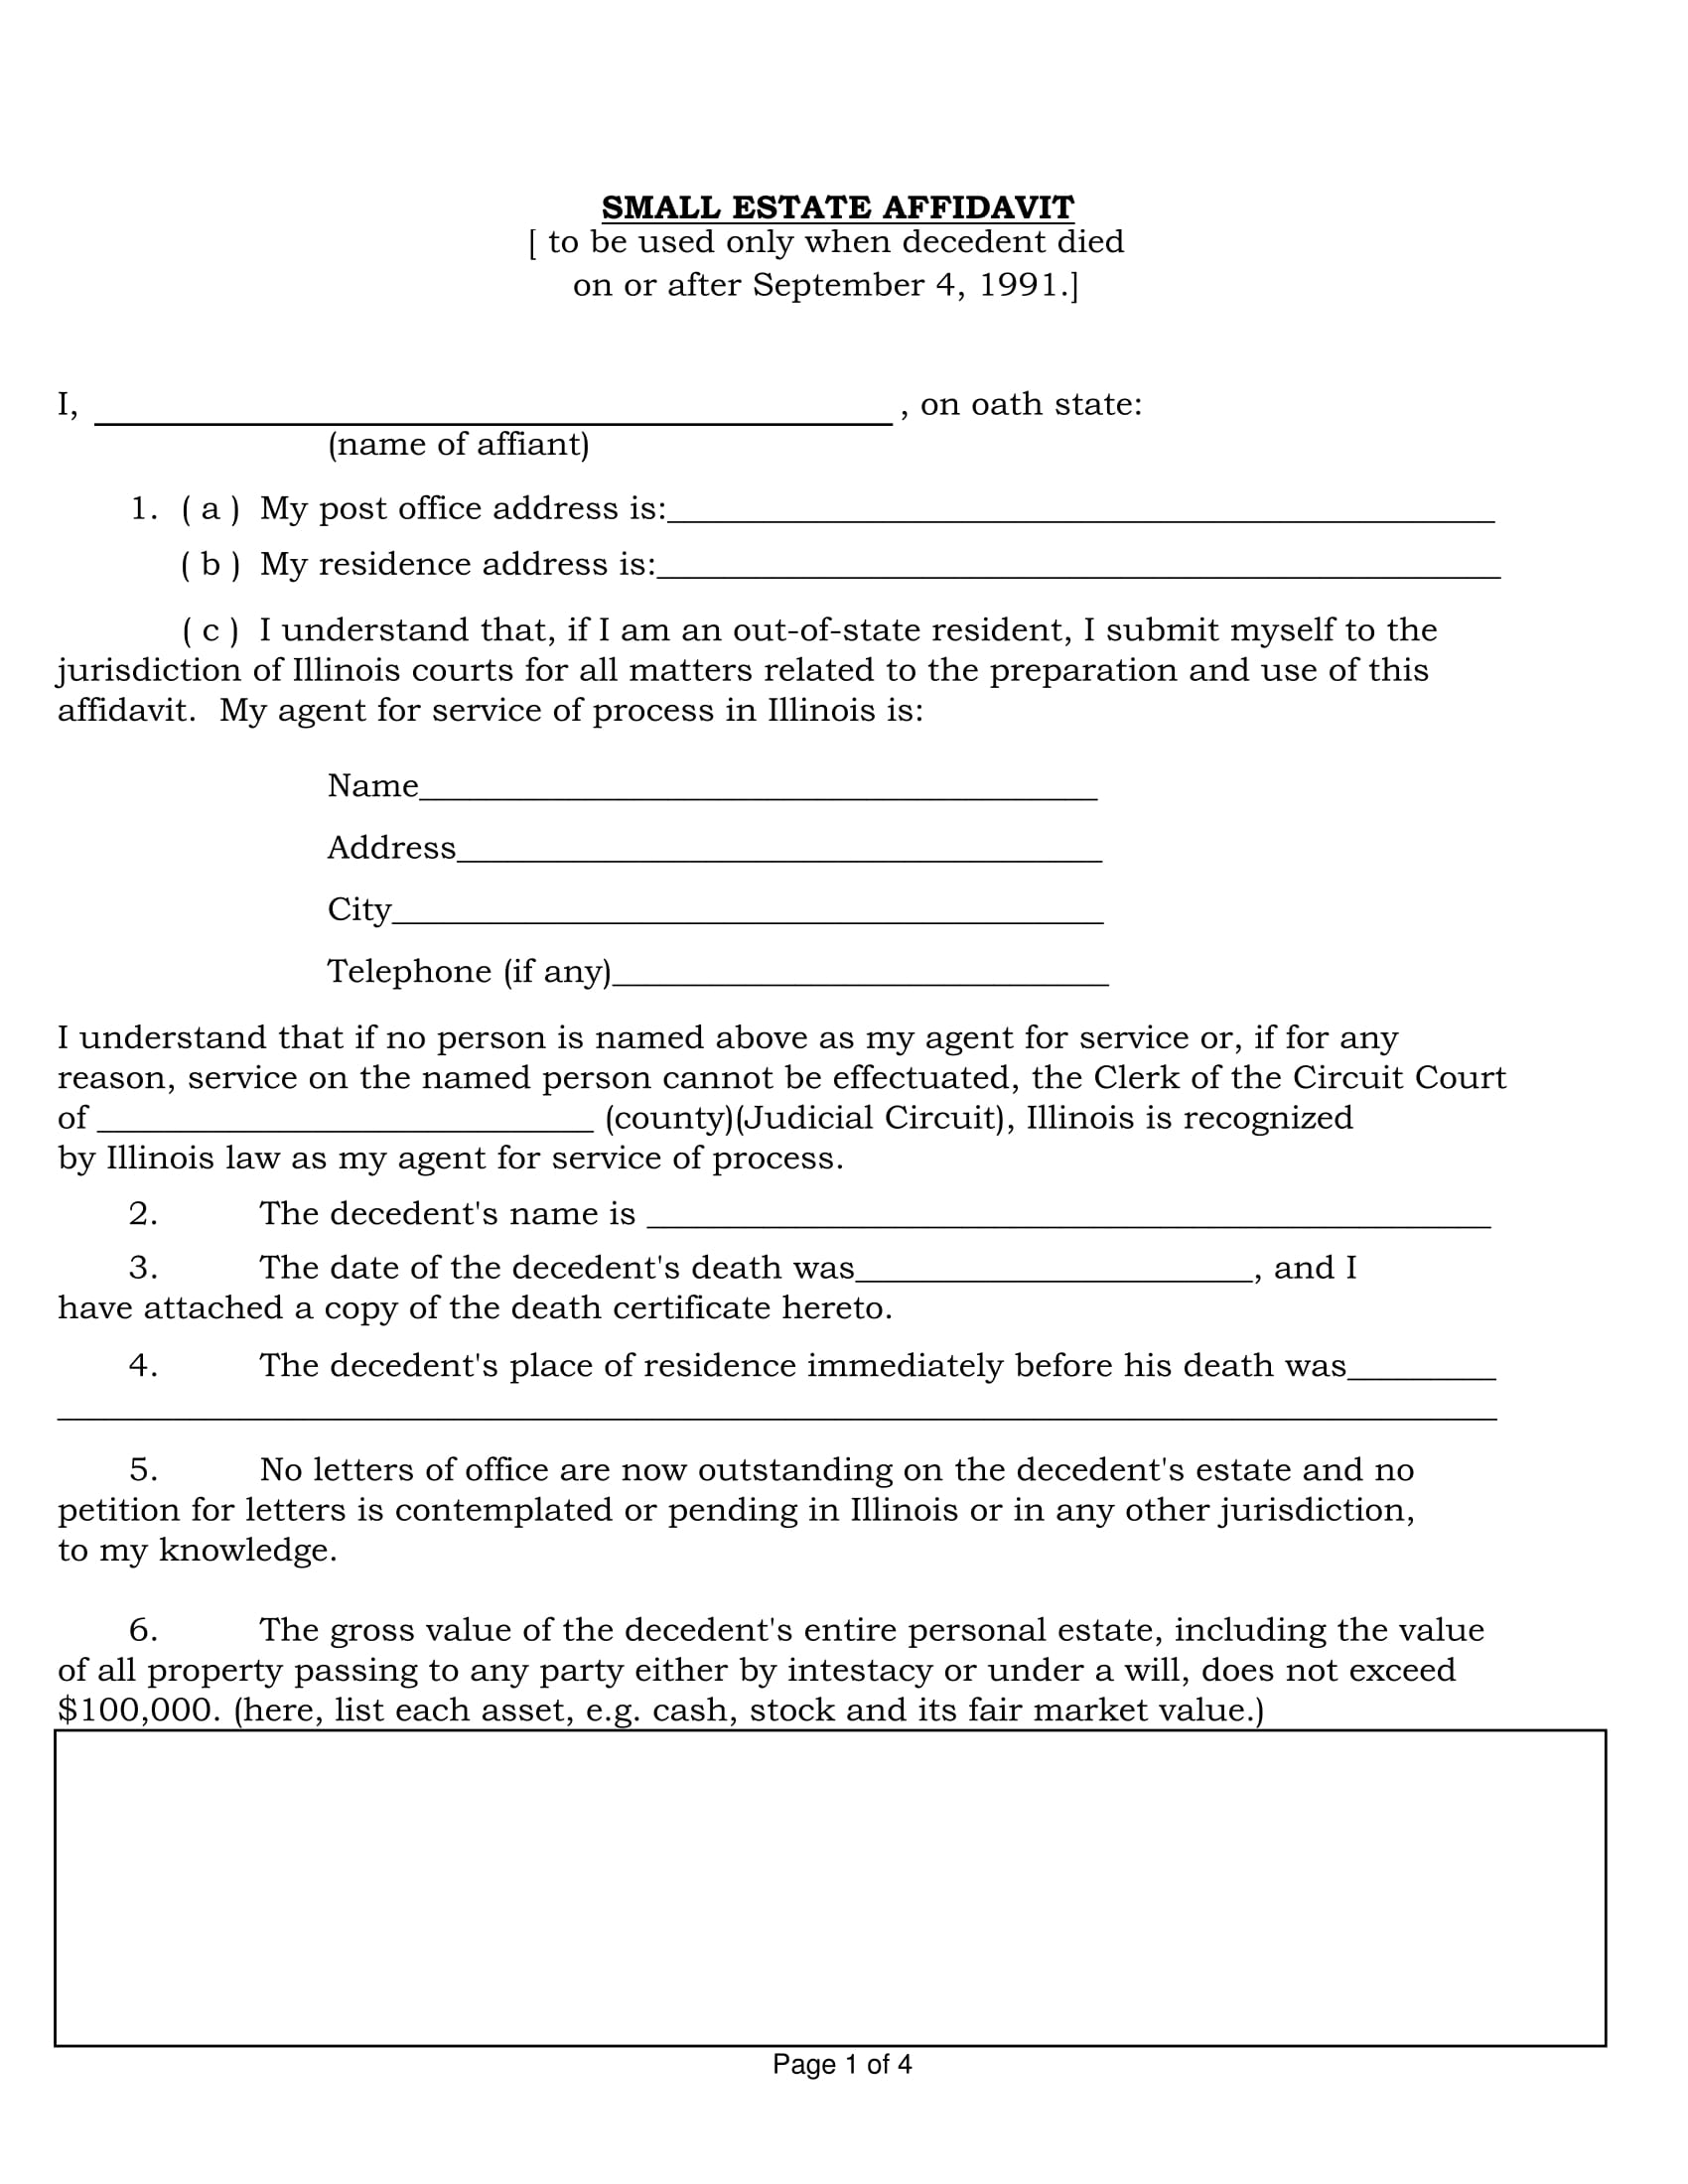 small estate affidavit form 1